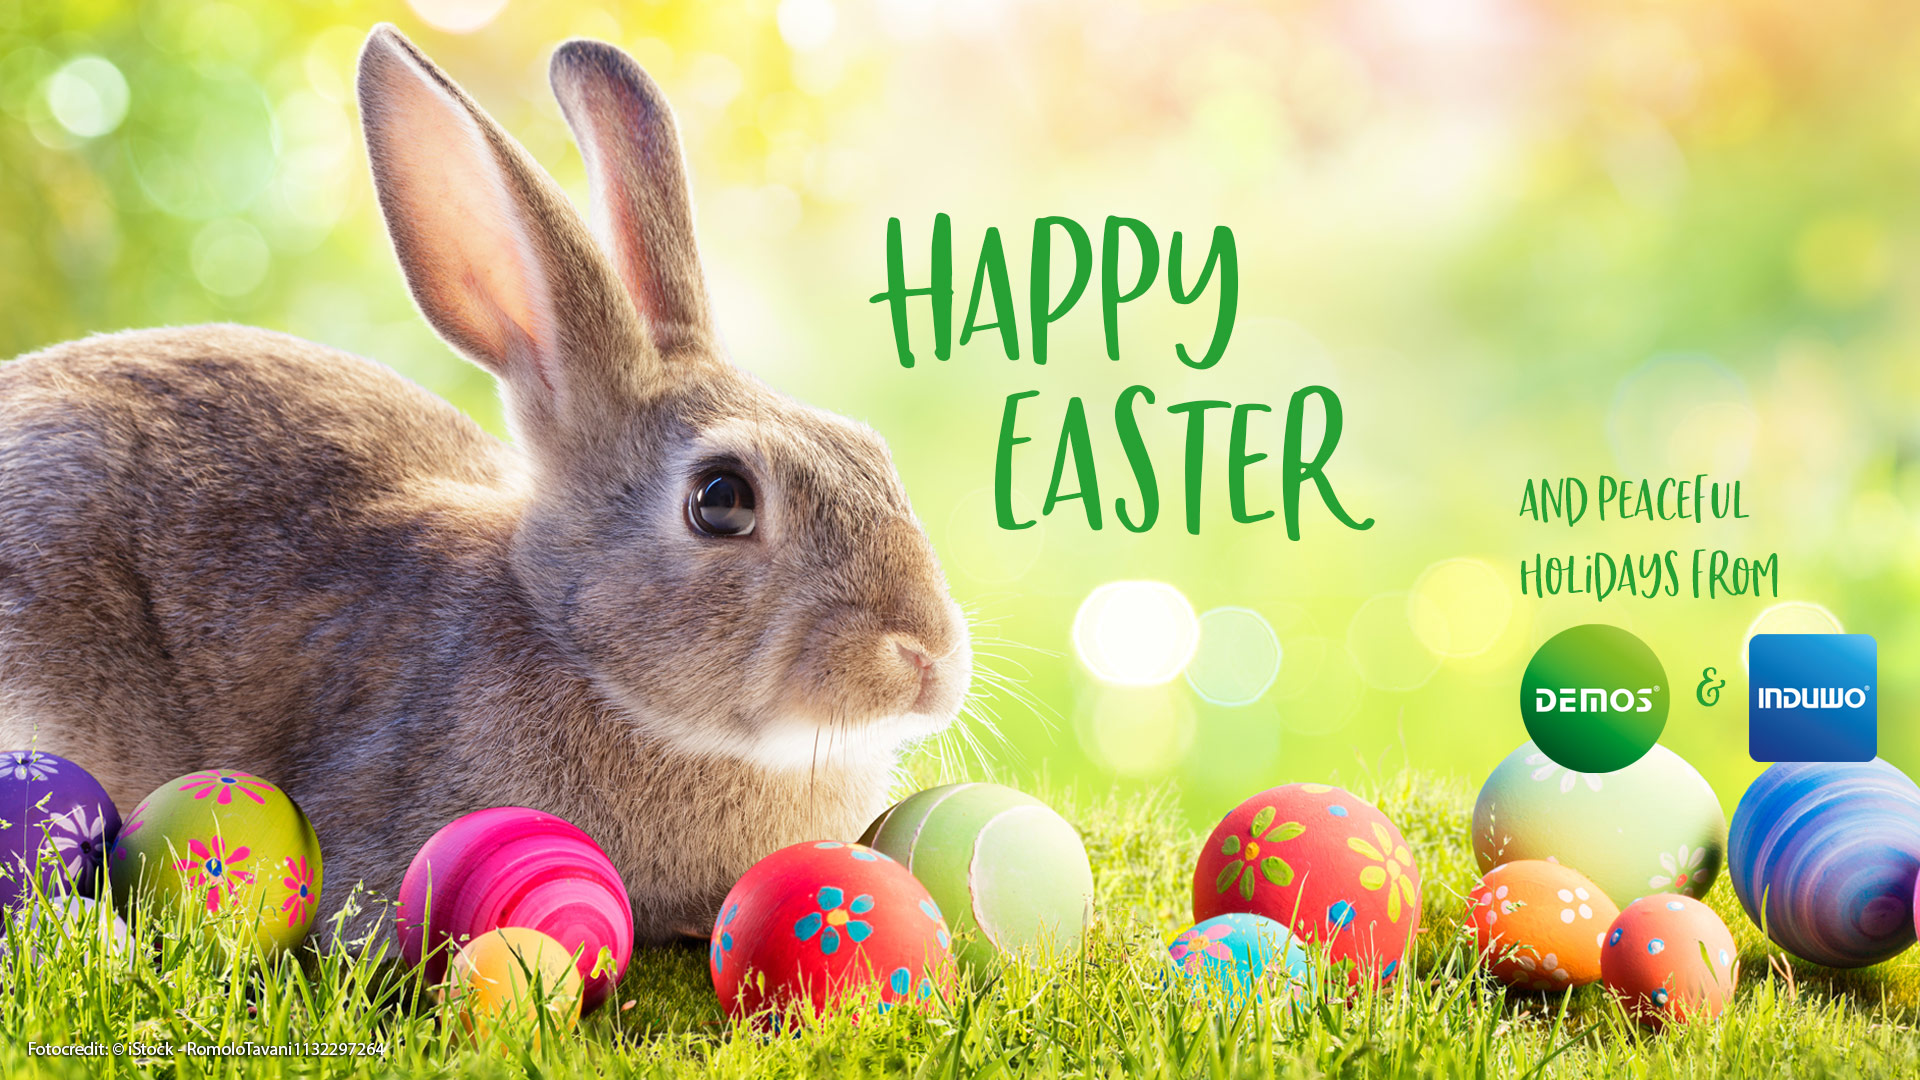 Happy Easter and joyful holidays